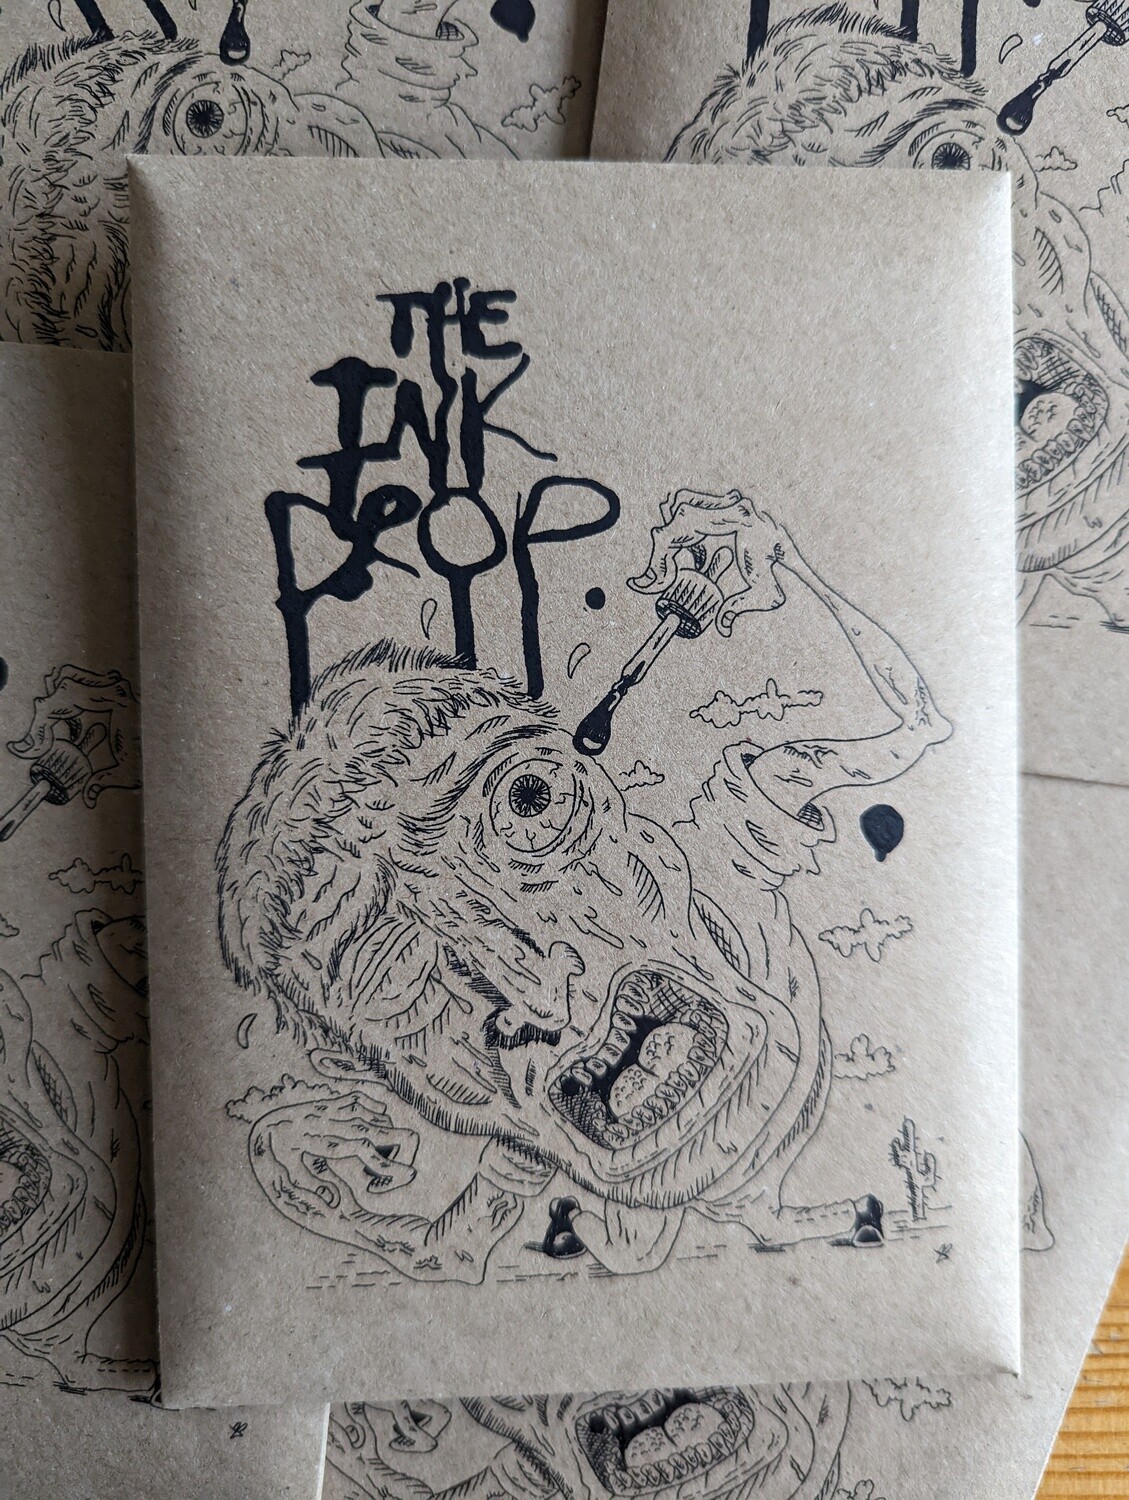 The Ink Drop